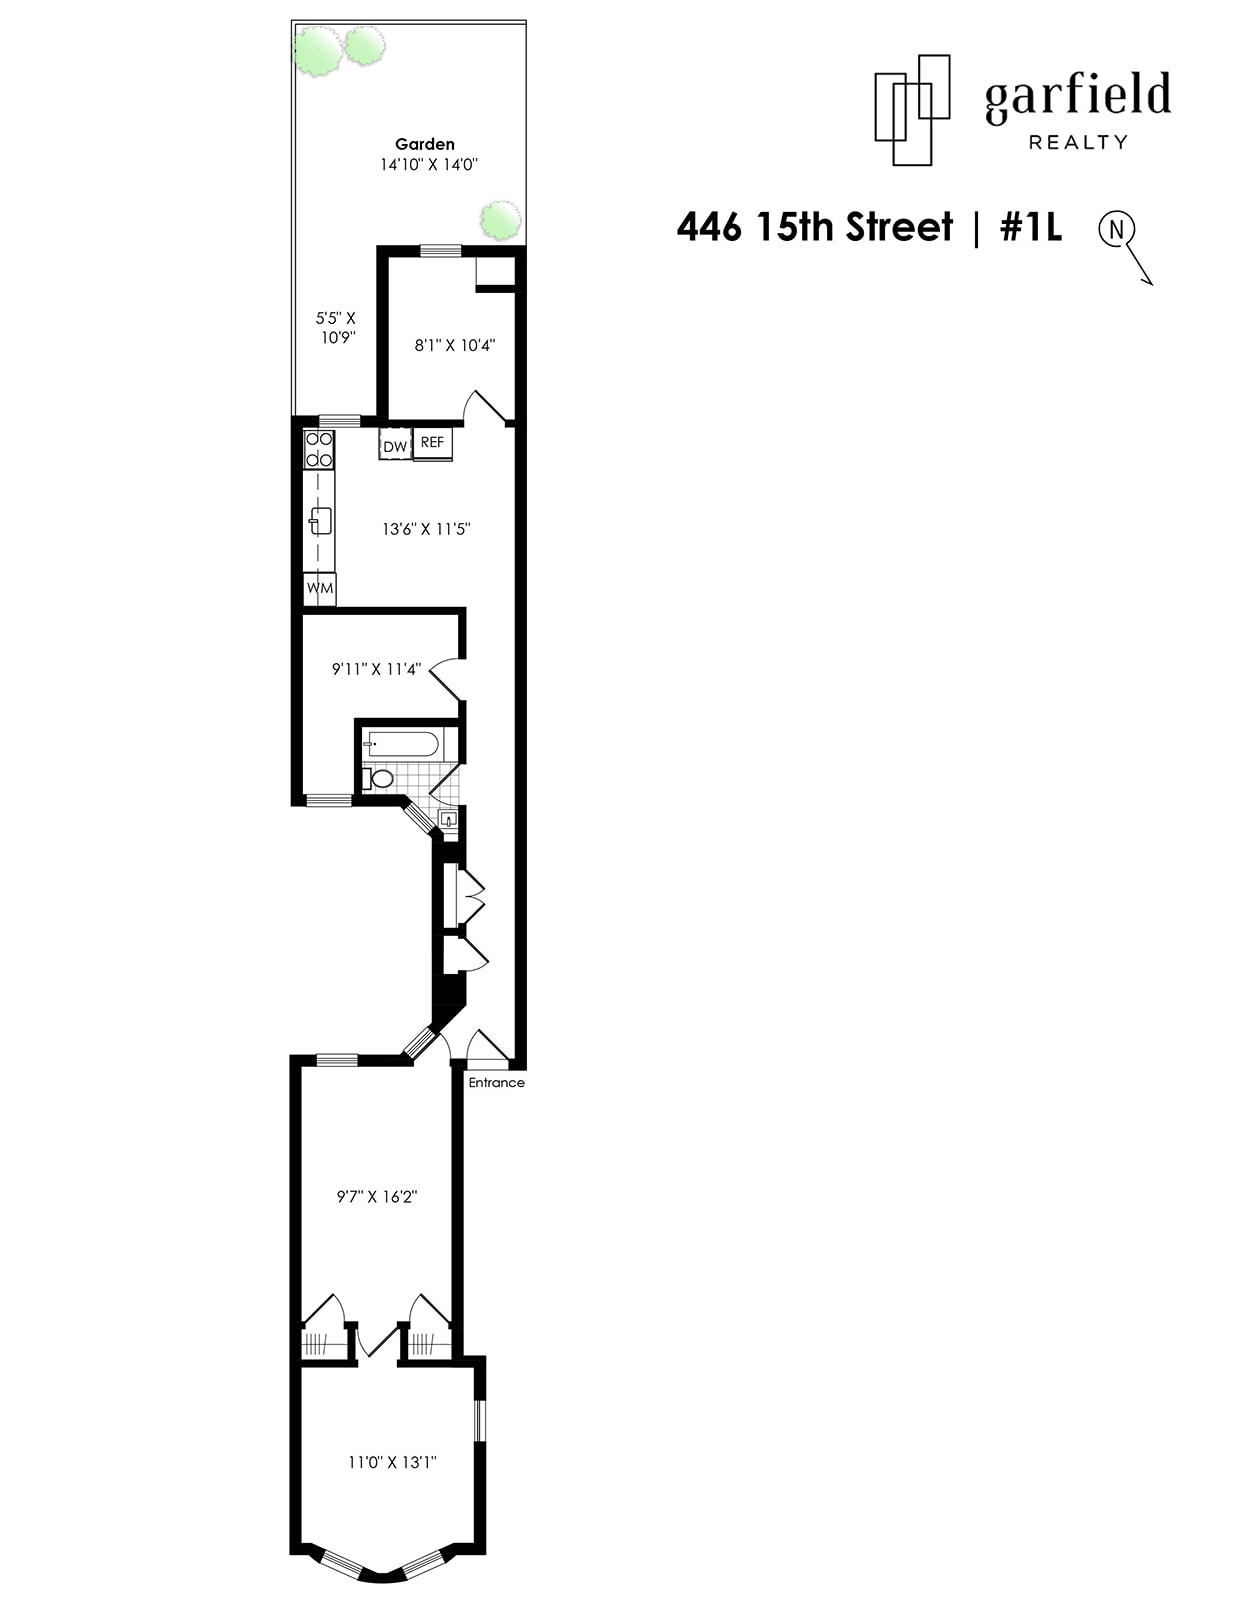 Floorplan of 446 15th St